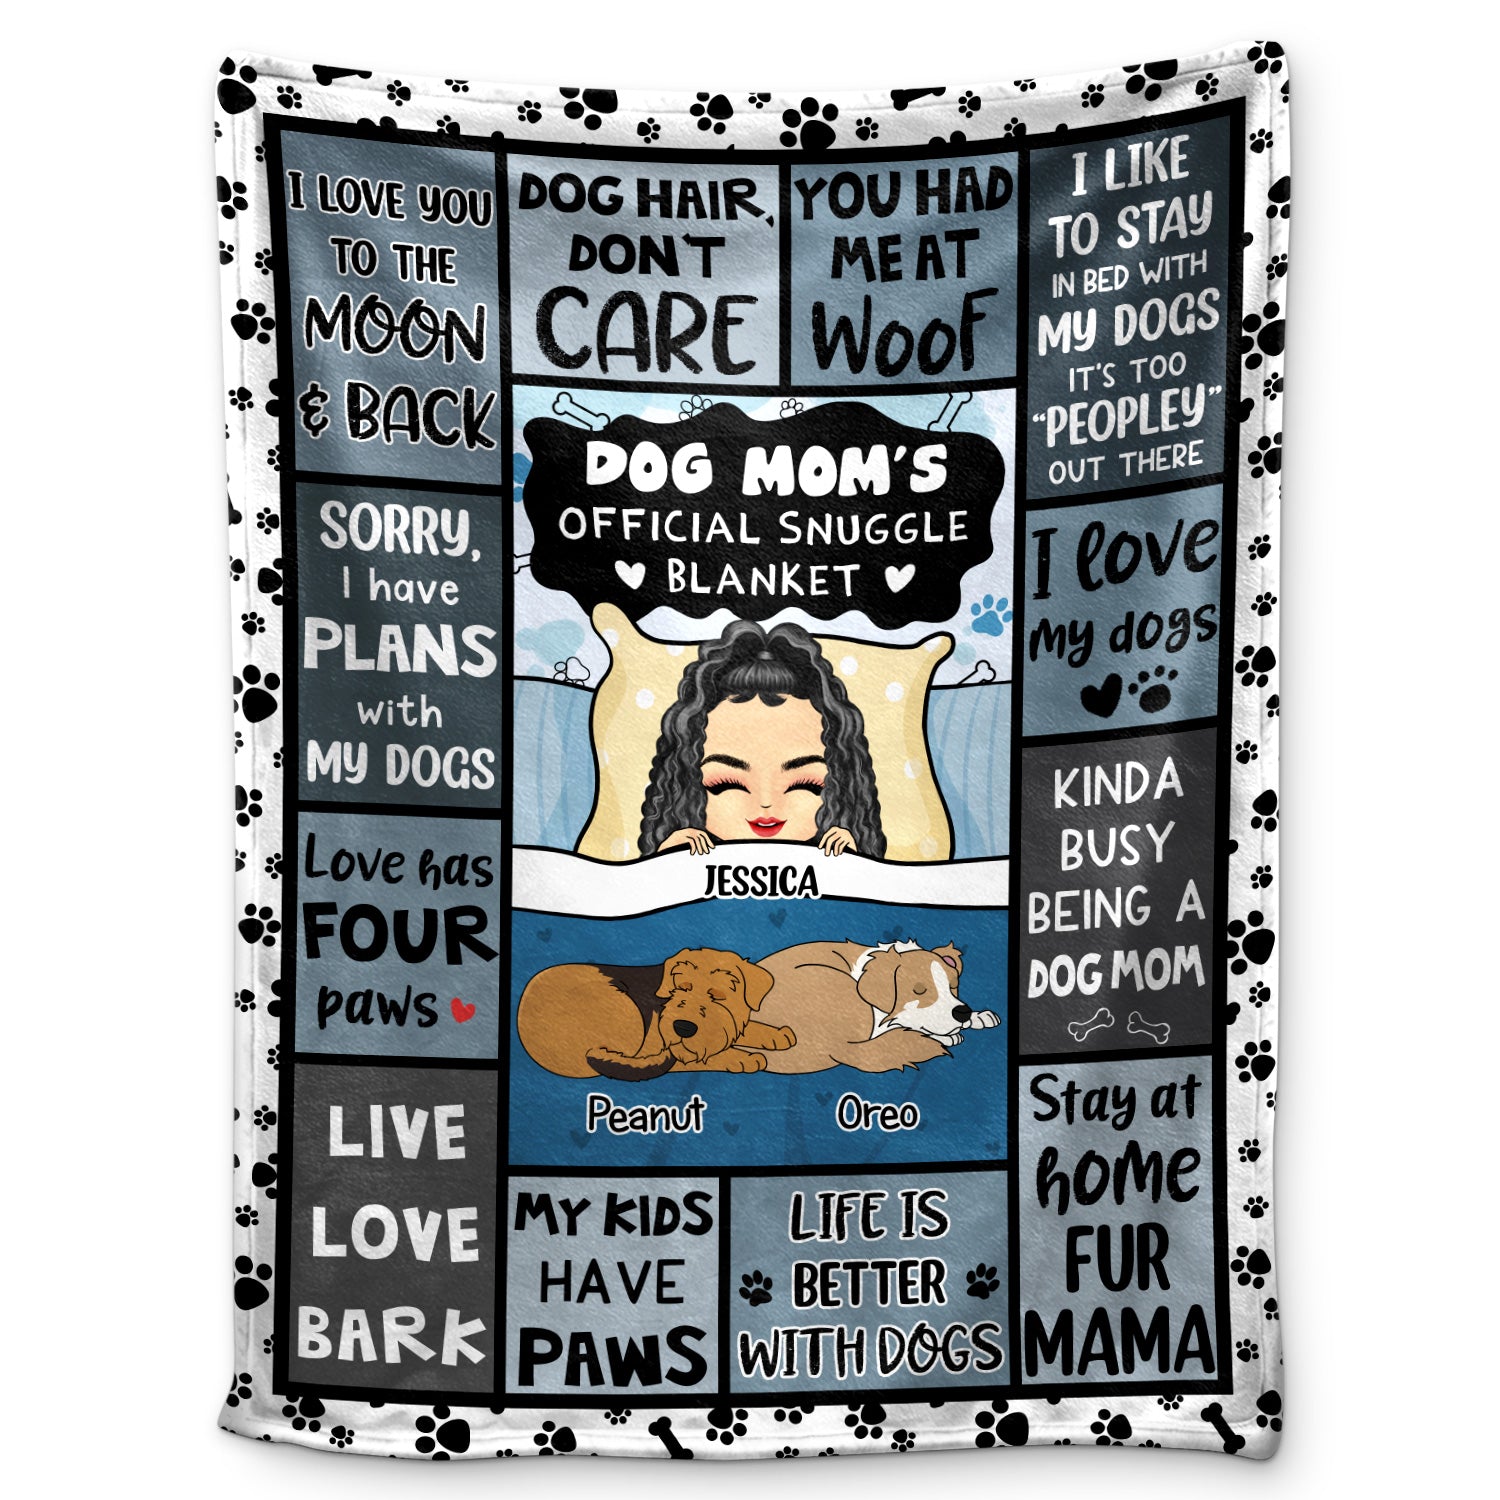 Dog Mom's Official Snuggle Blanket - Gift For Dog Lovers - Personalized Fleece Blanket